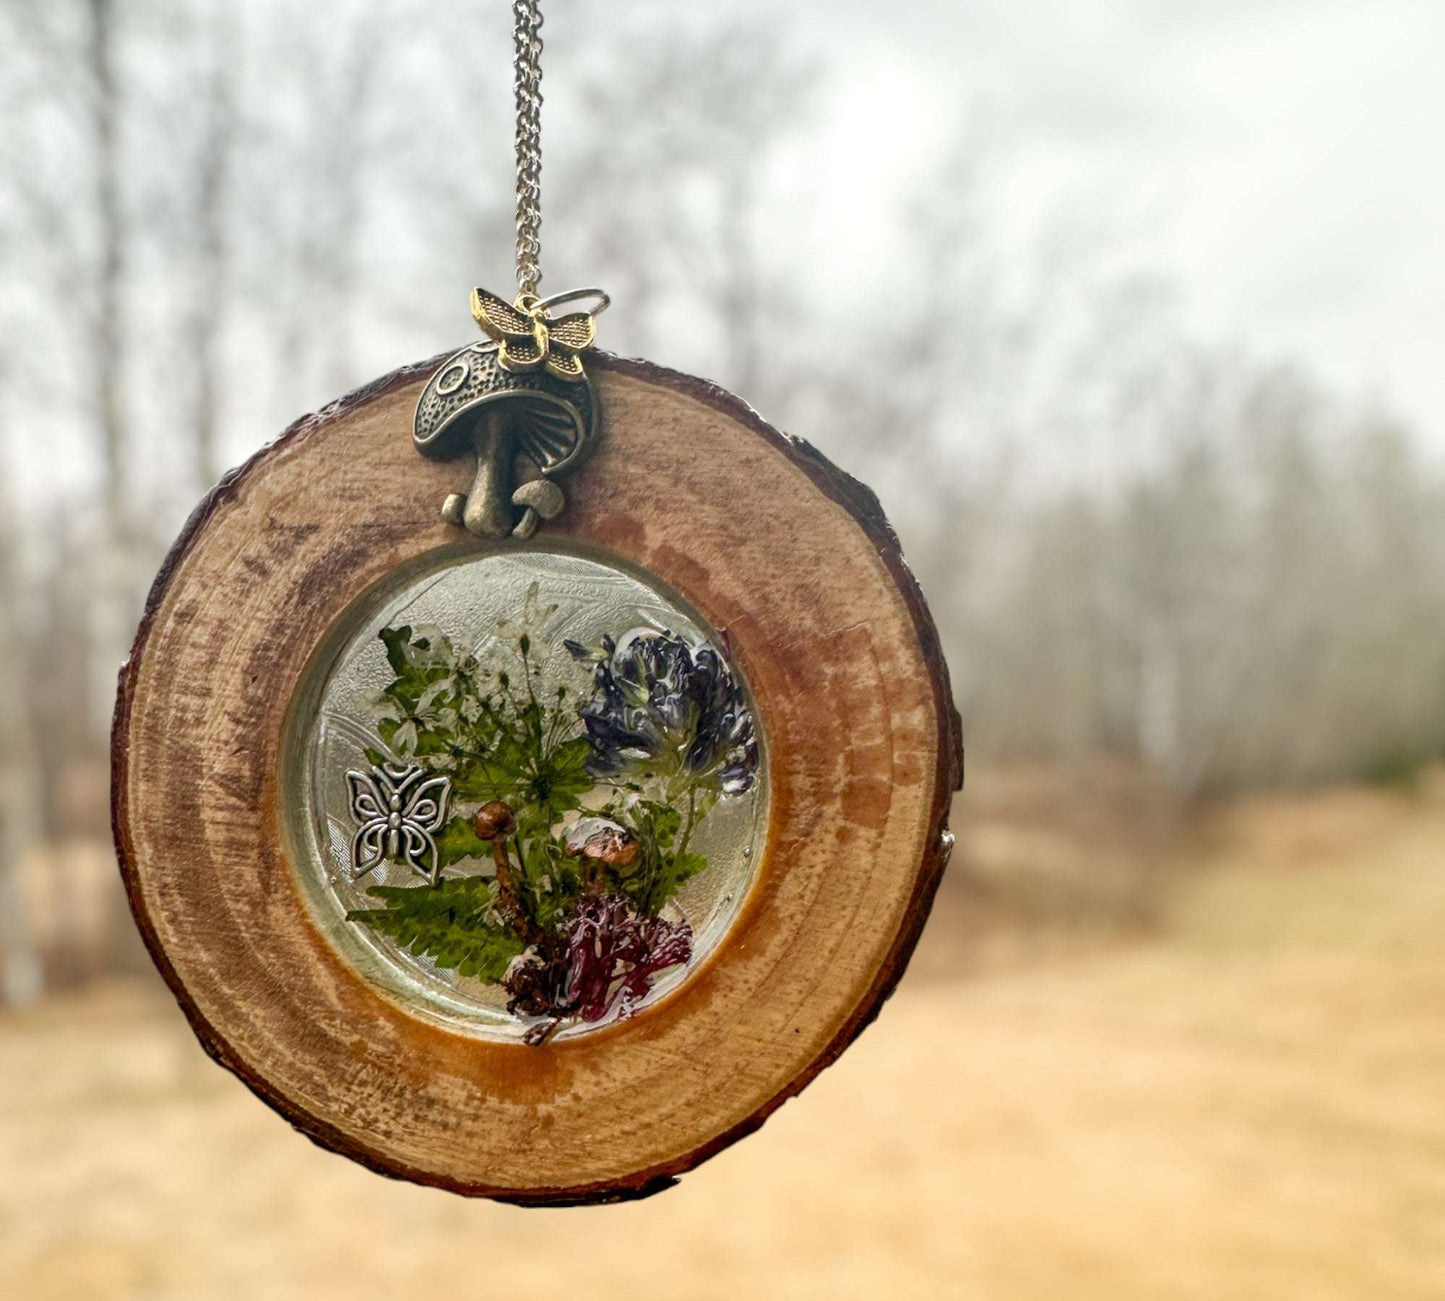 Suncatcher Enchanted Forest: Wood Slice Suncatcher Home Decor Gift Idea